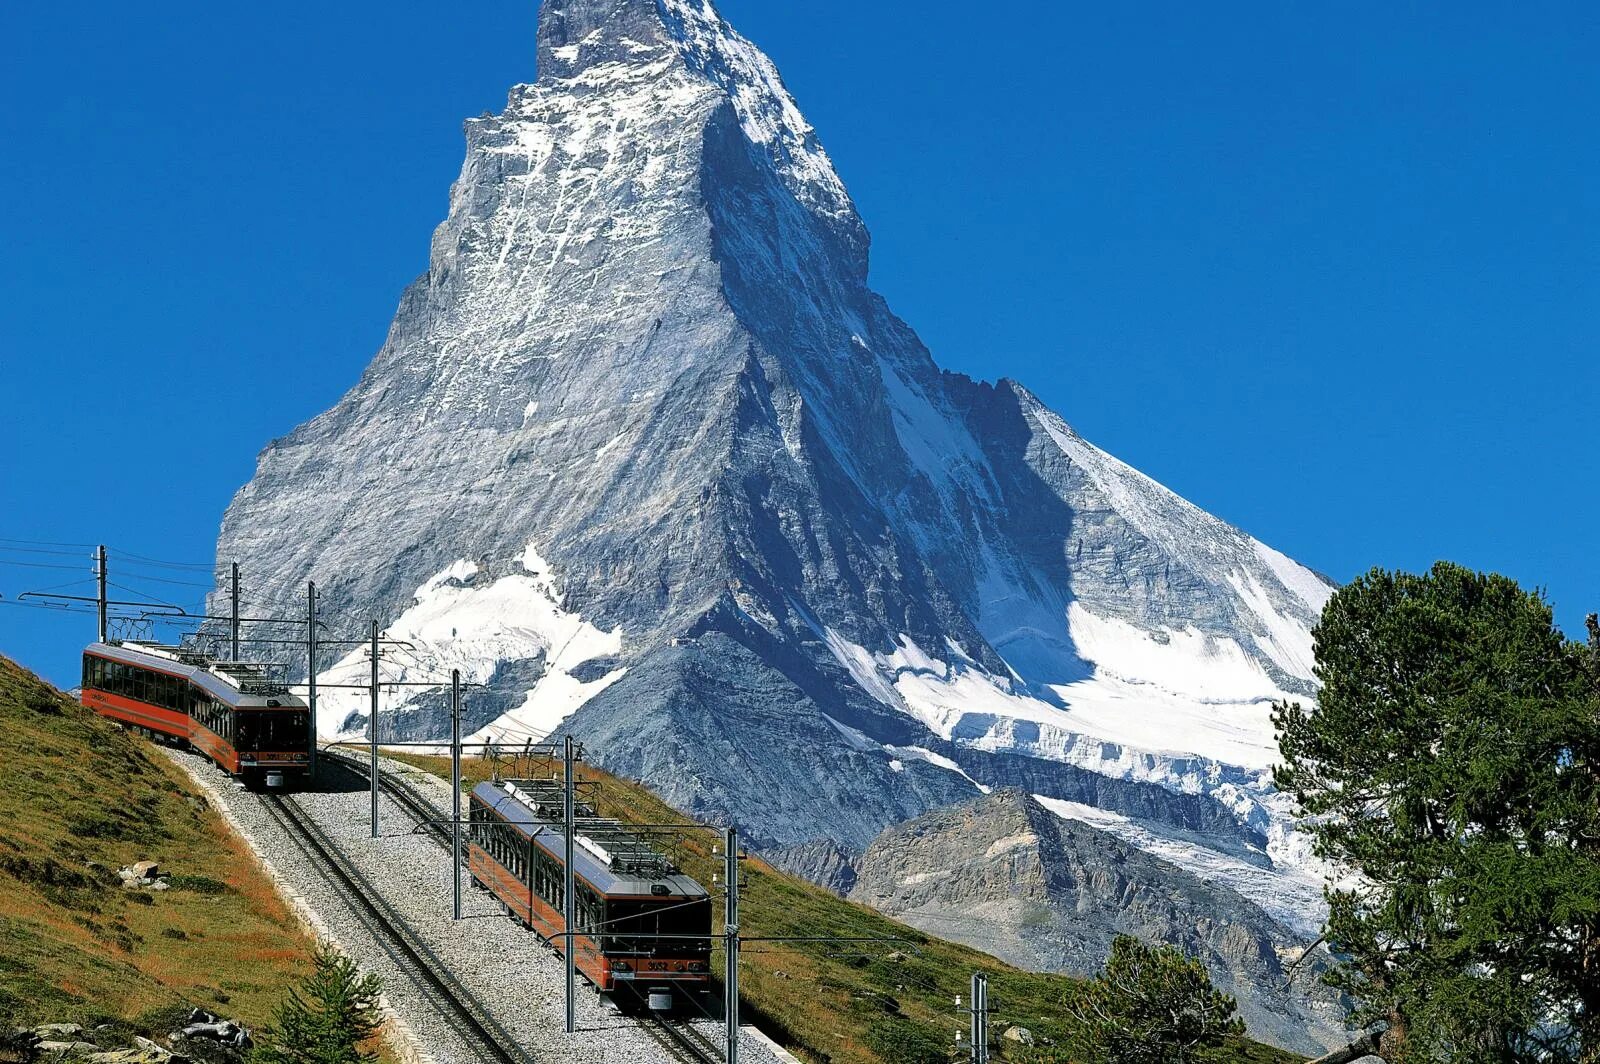 The high mountain in europe is. Маттерхорн Швейцария. Вершина в Швейцарии Маттерхорн. Пик Маттерхорн Швейцария. Matterhorn гора в Швейцарии.